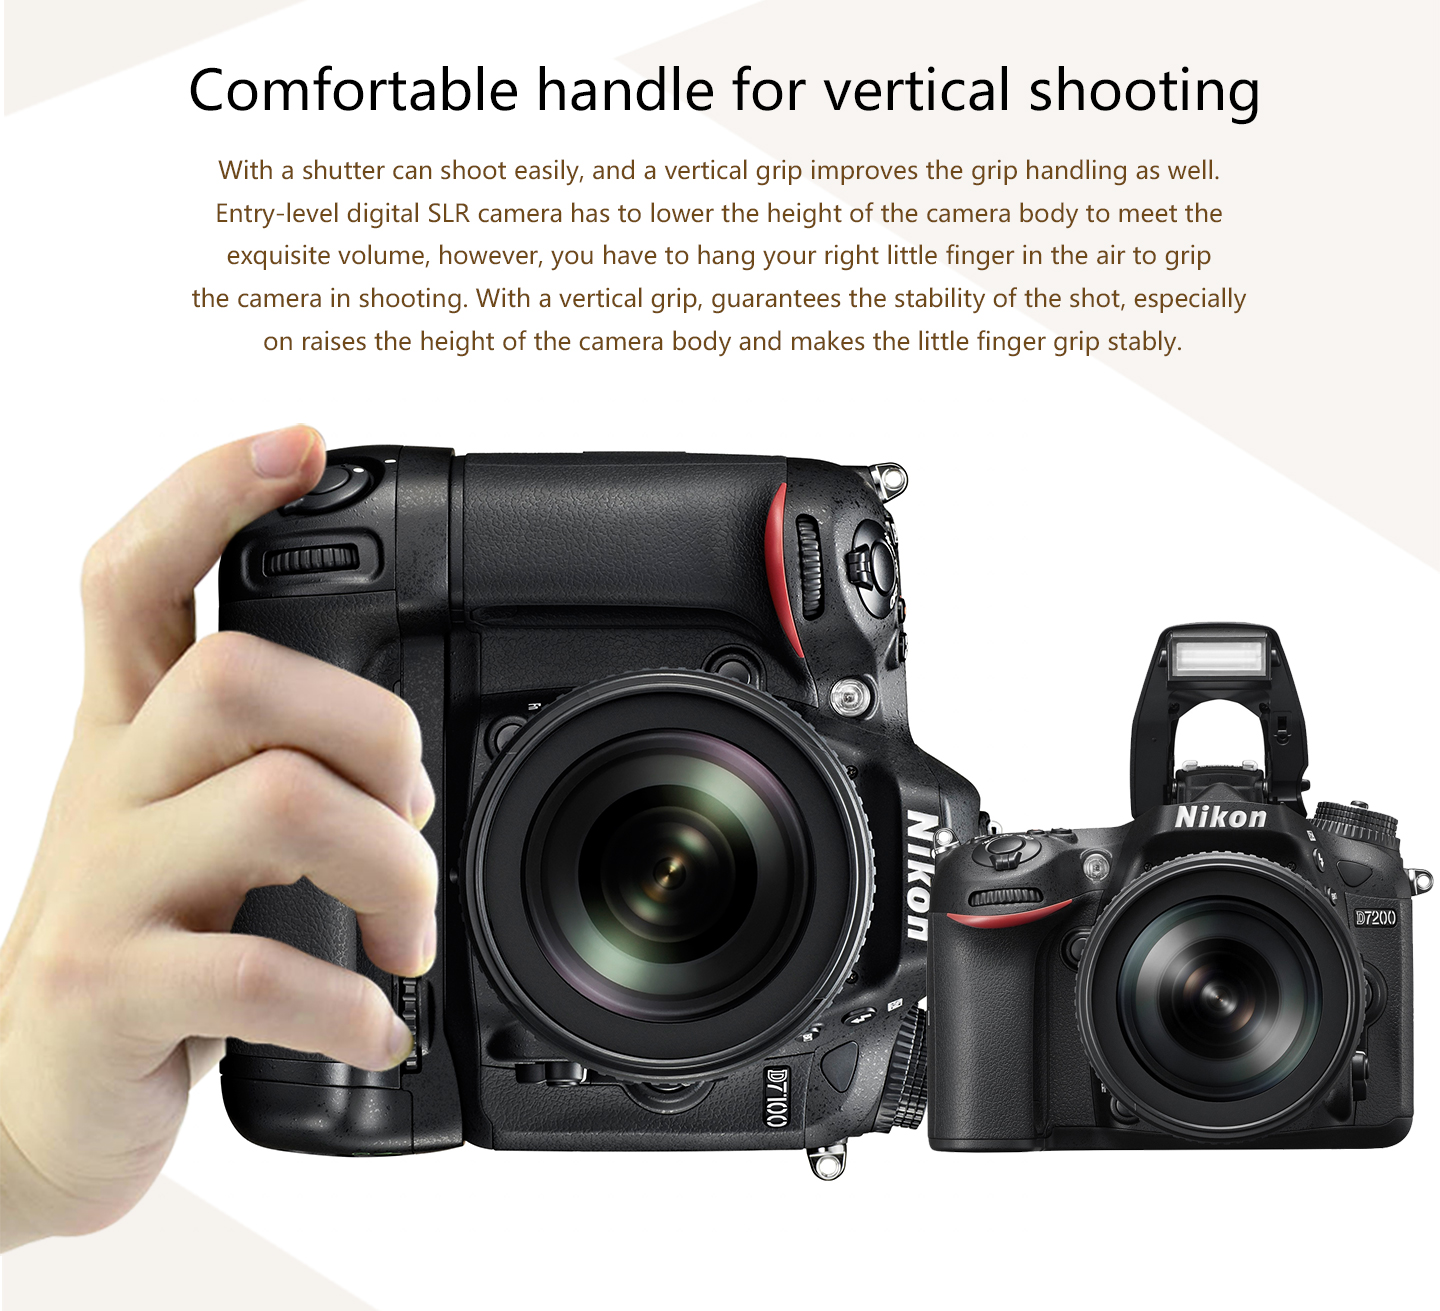 Comfortable handle dor vertical shooting